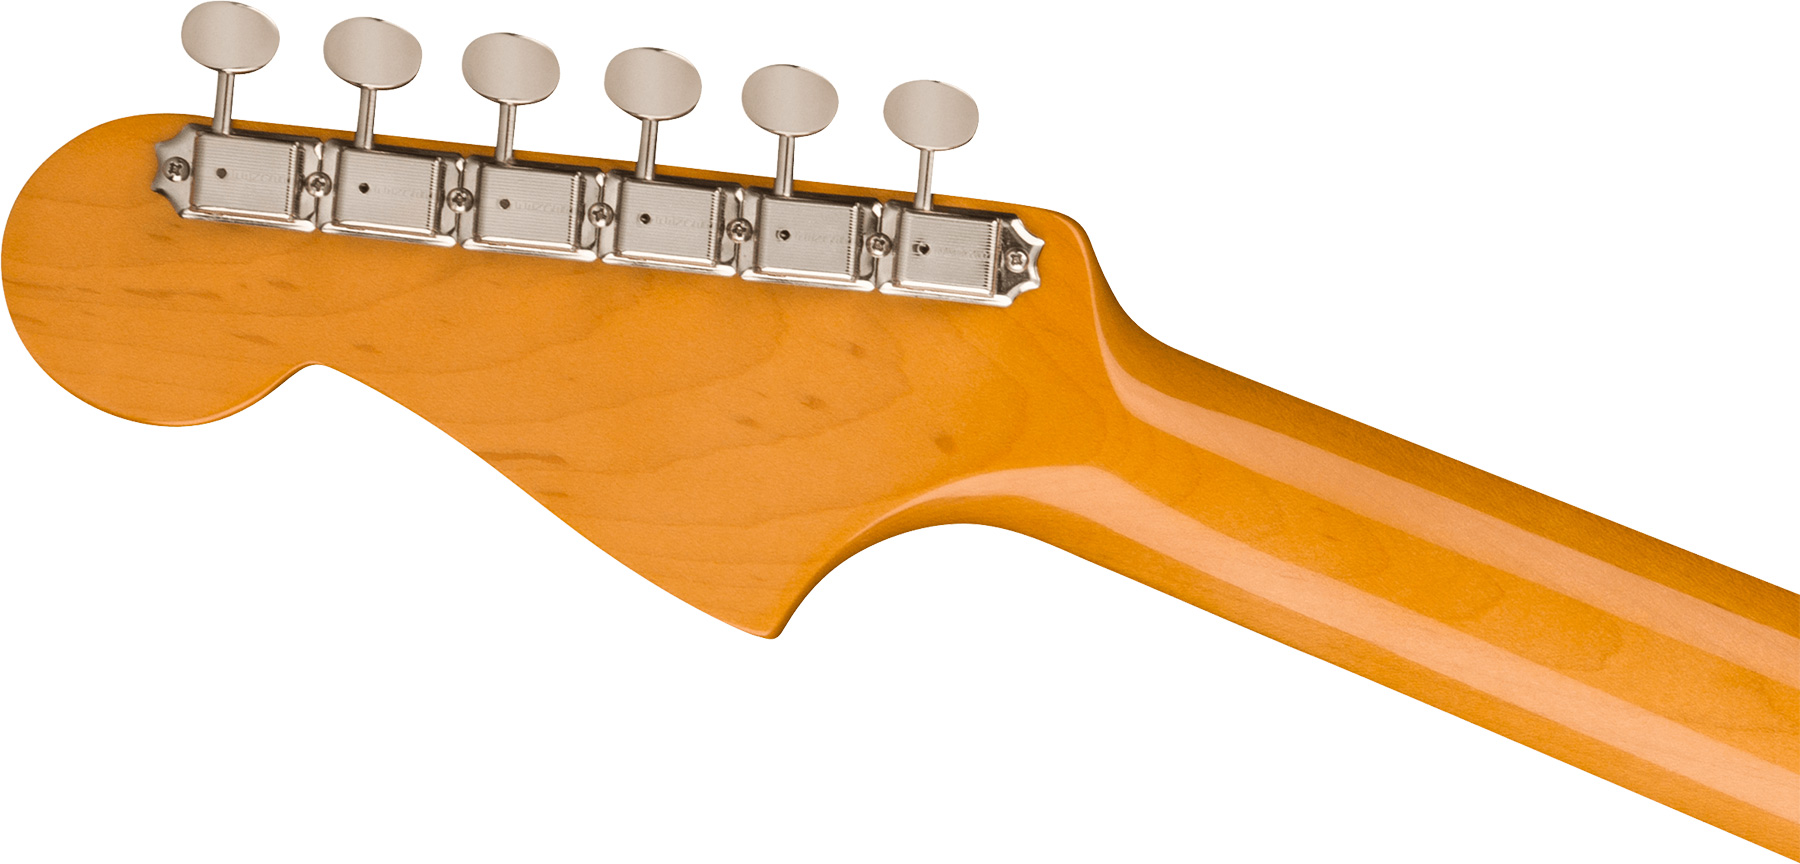 Fender Jazzmaster 1966 American Vintage Ii Usa Sh Trem Rw - 3-color Sunburst - Retro rock electric guitar - Variation 3